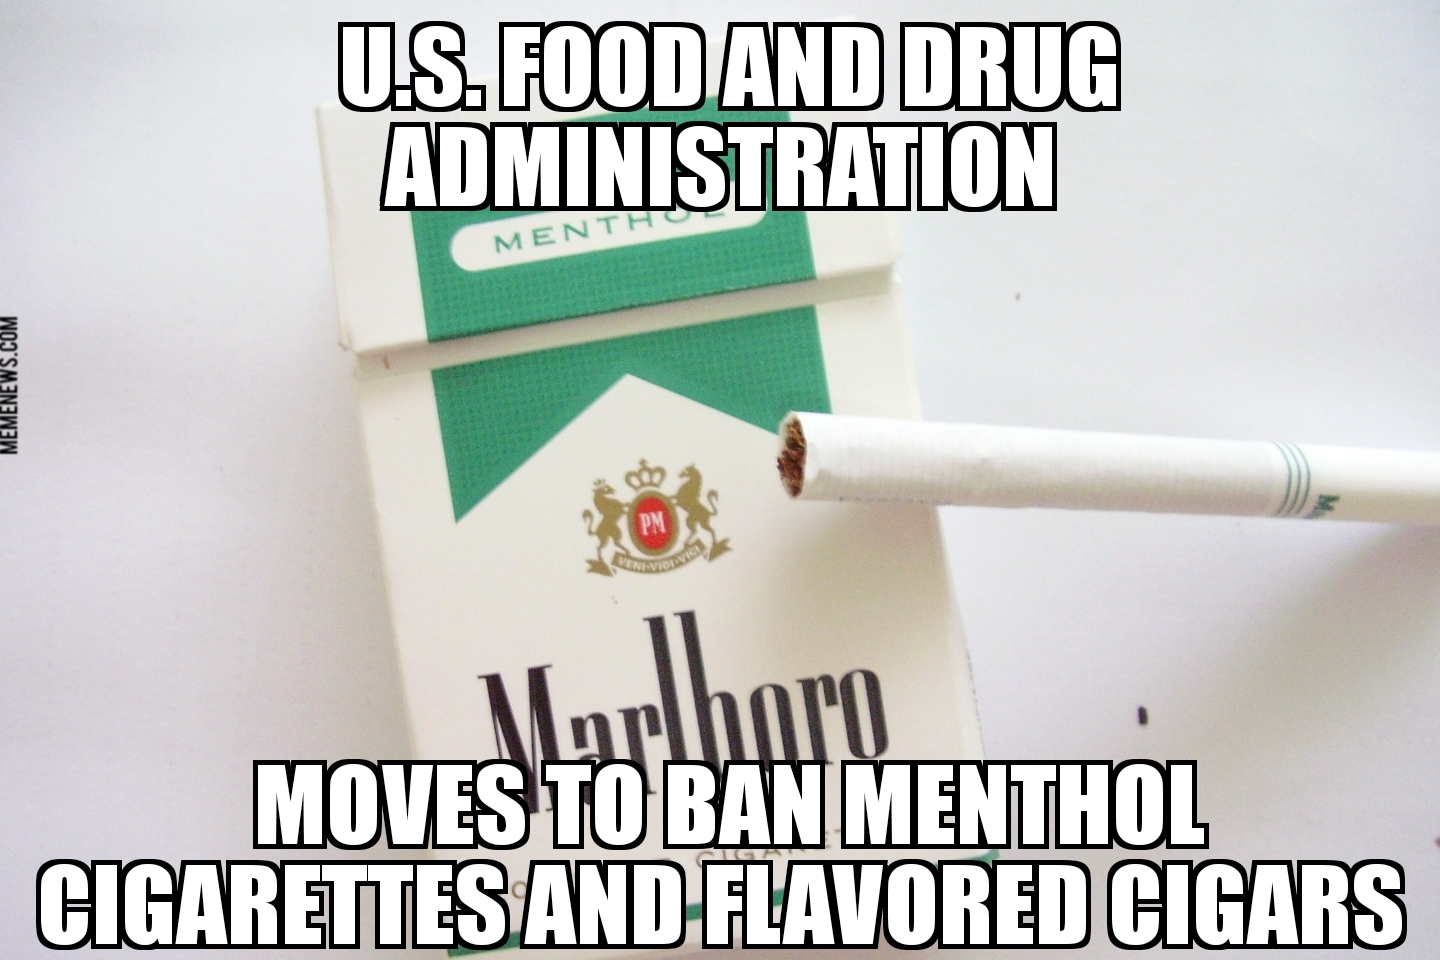 FDA moves to ban menthol cigarettes